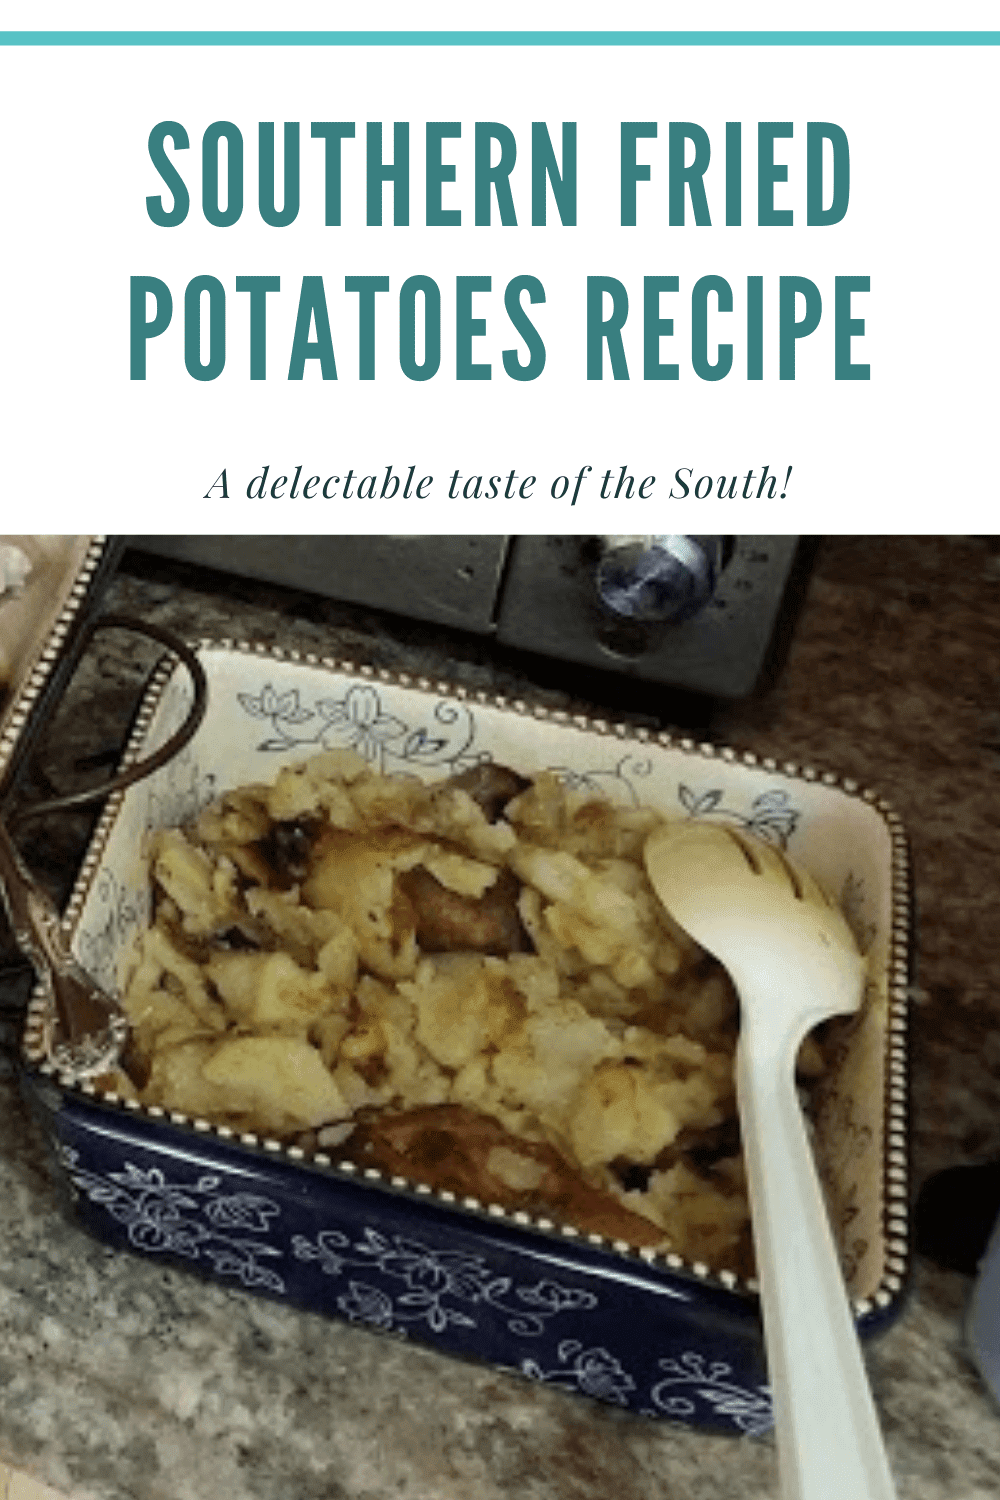 Southern Fried Potatoes Recipe - David's Prep Station